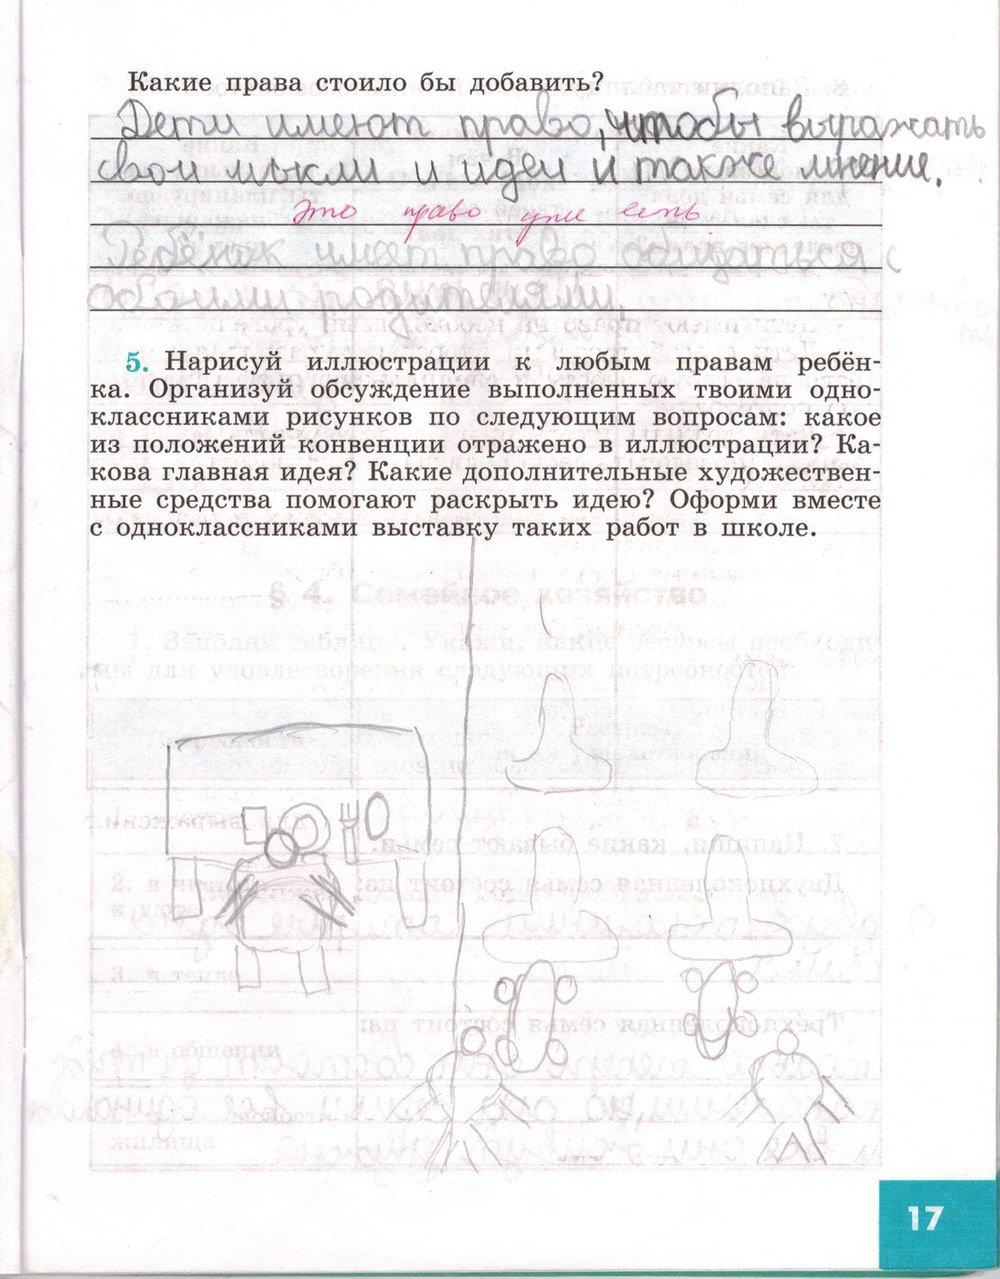 гдз 5 класс рабочая тетрадь страница 17 обществознание Иванова, Хотеенкова